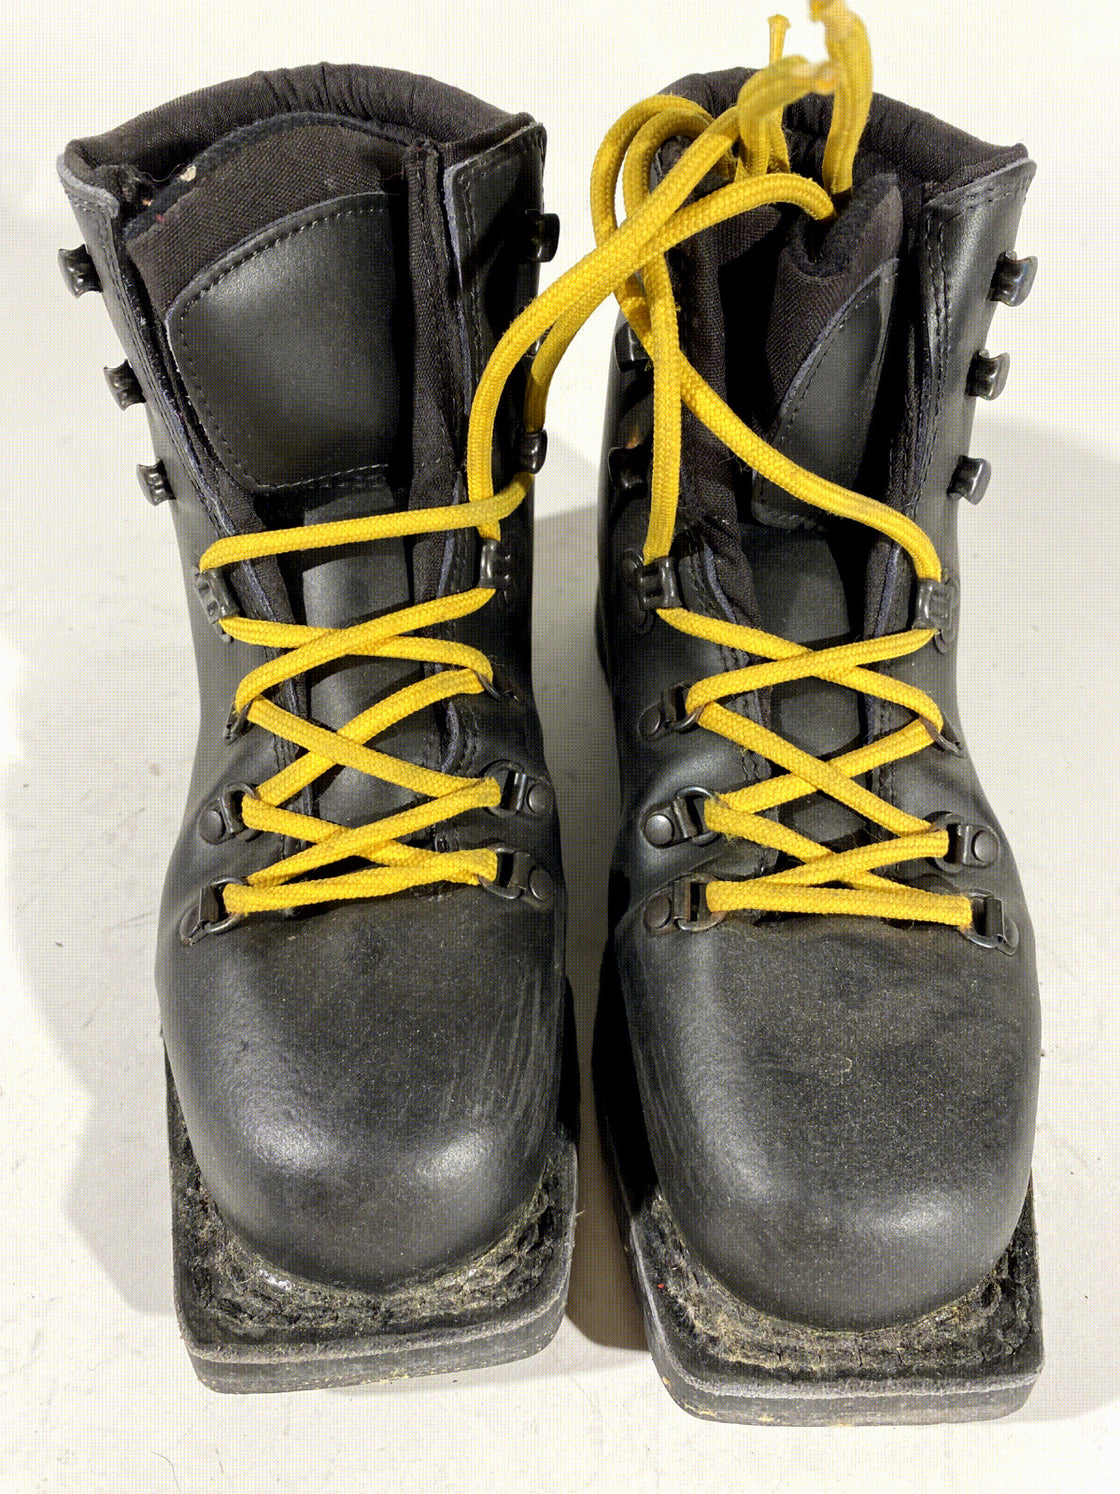 Everest Mountain Telemark Nordic Norm Cross Ski Boots Size EU40 US7.5 NN 75mm